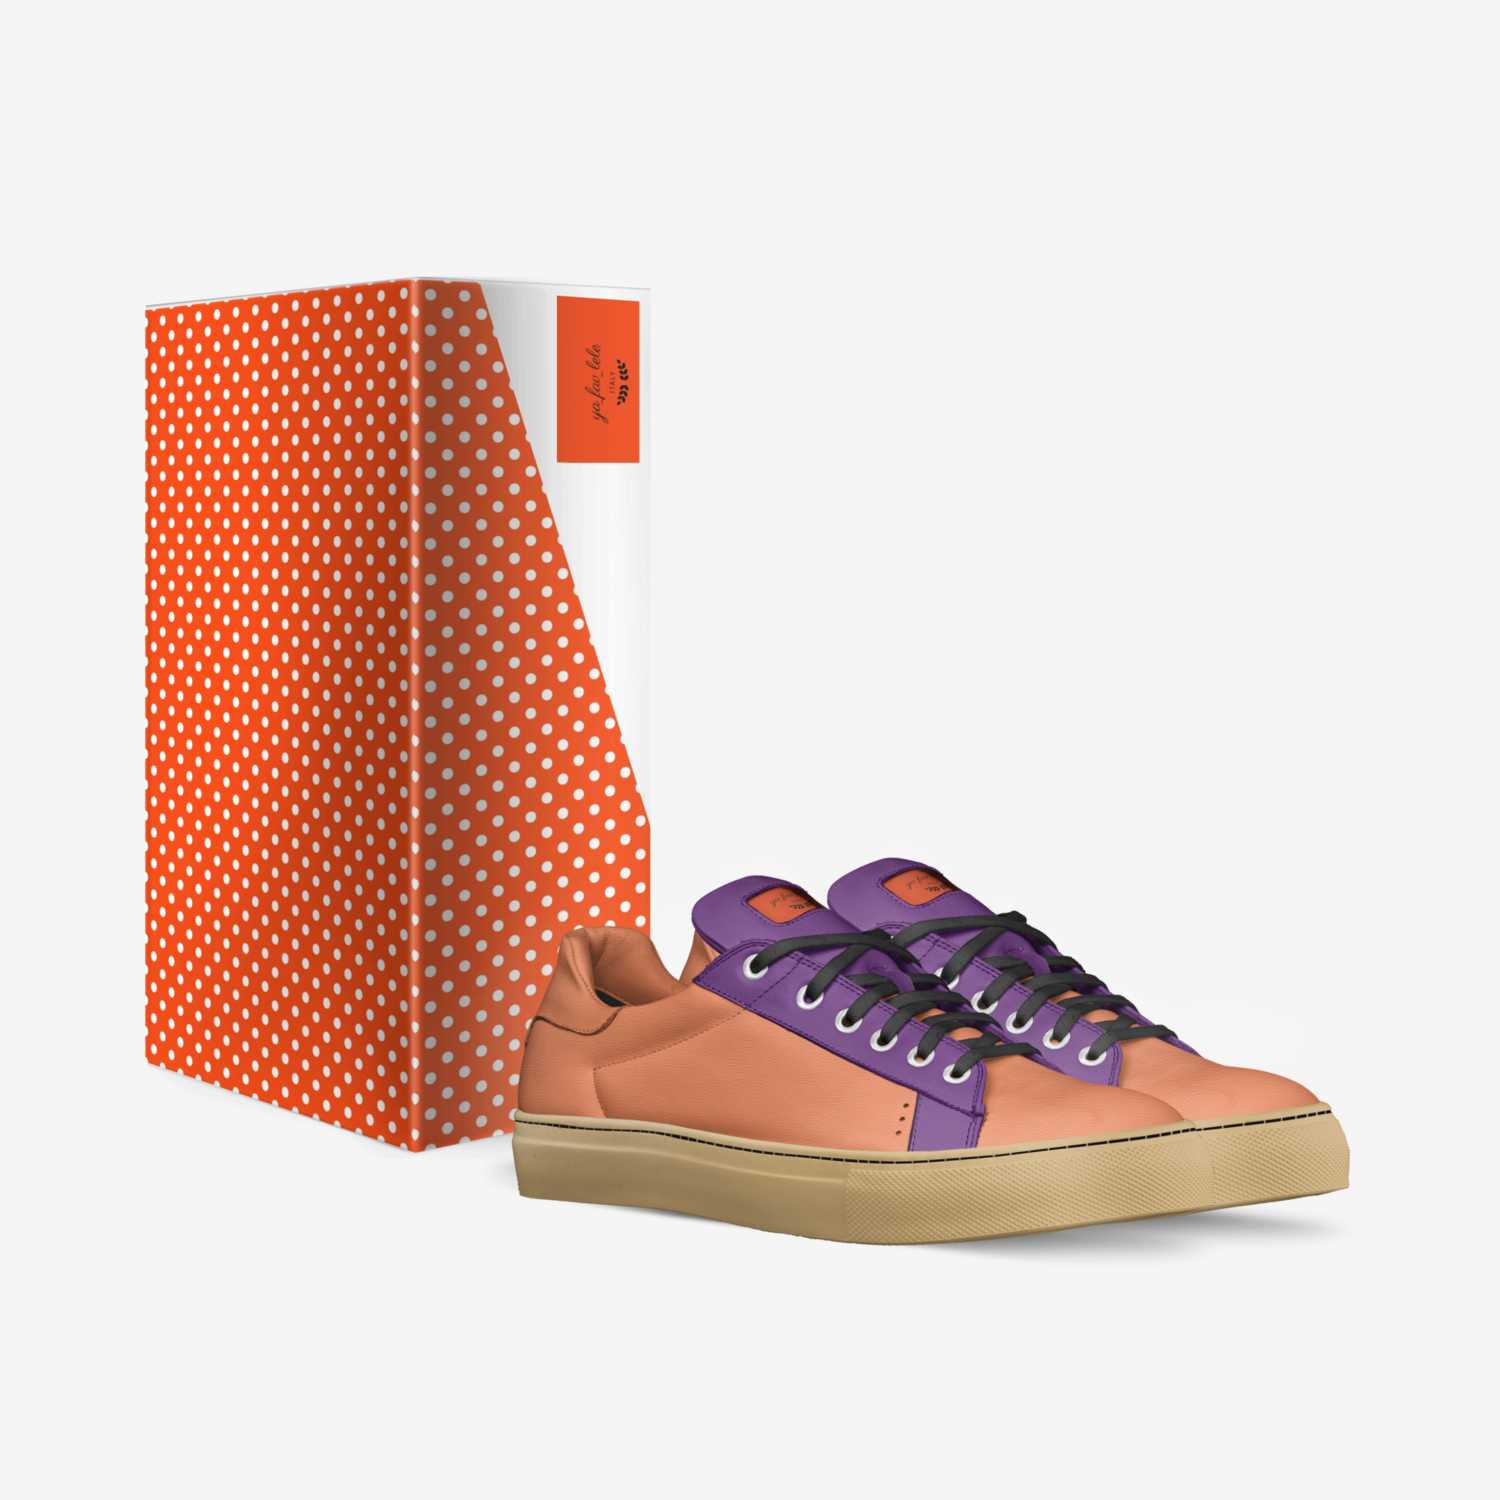 ya_fav_lele custom made in Italy shoes by Alicia | Box view